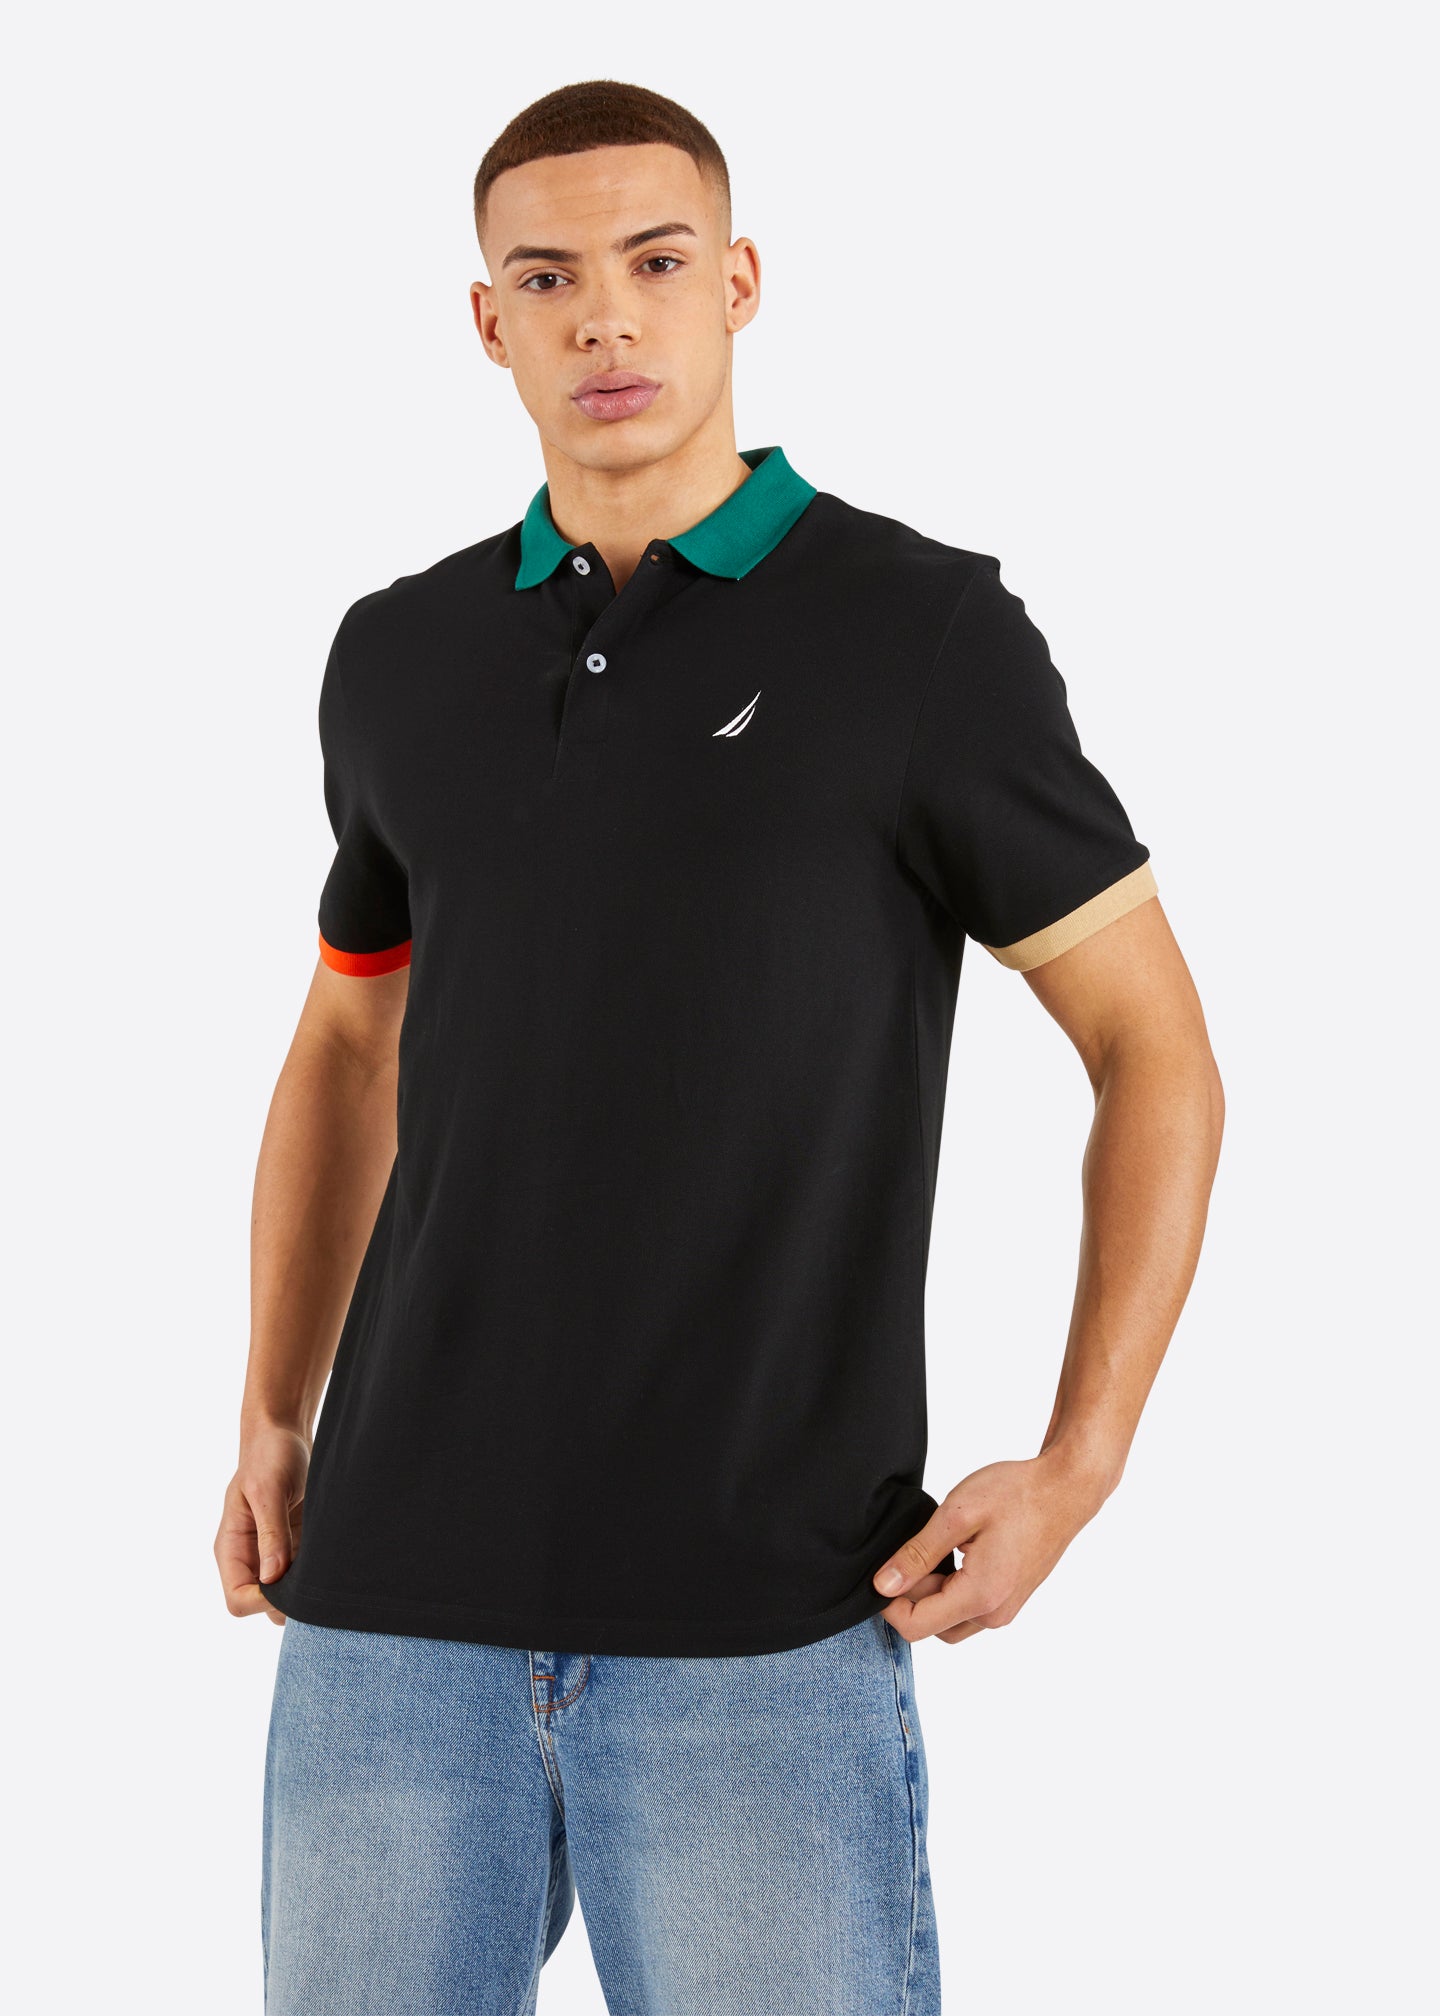 Nautica Logan Polo Shirt - Black - Front